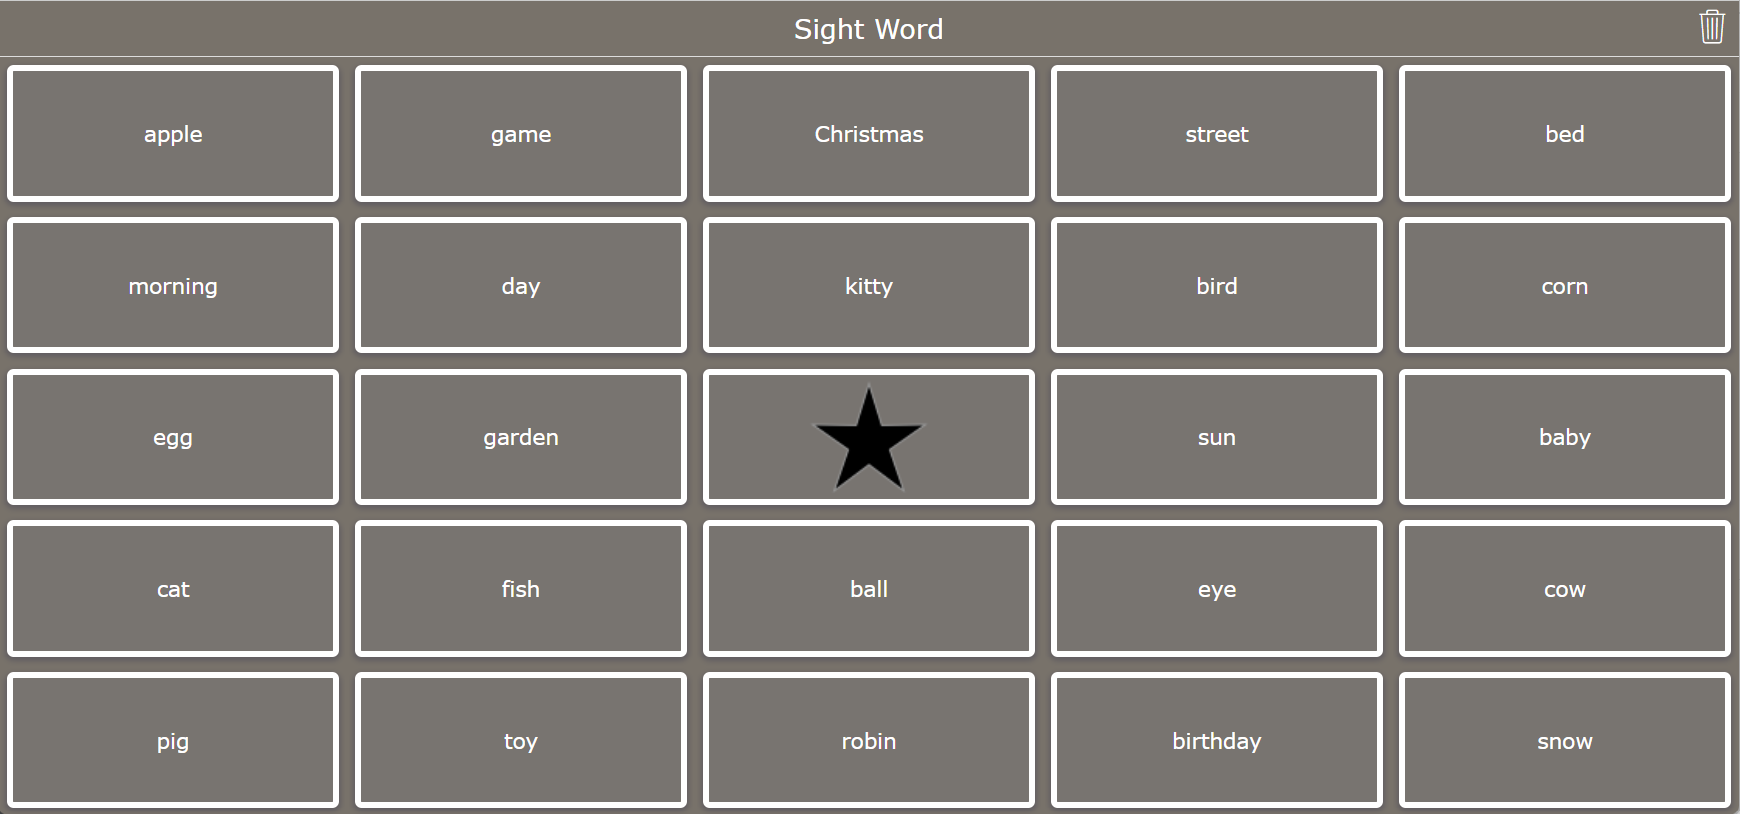 language game: bingo